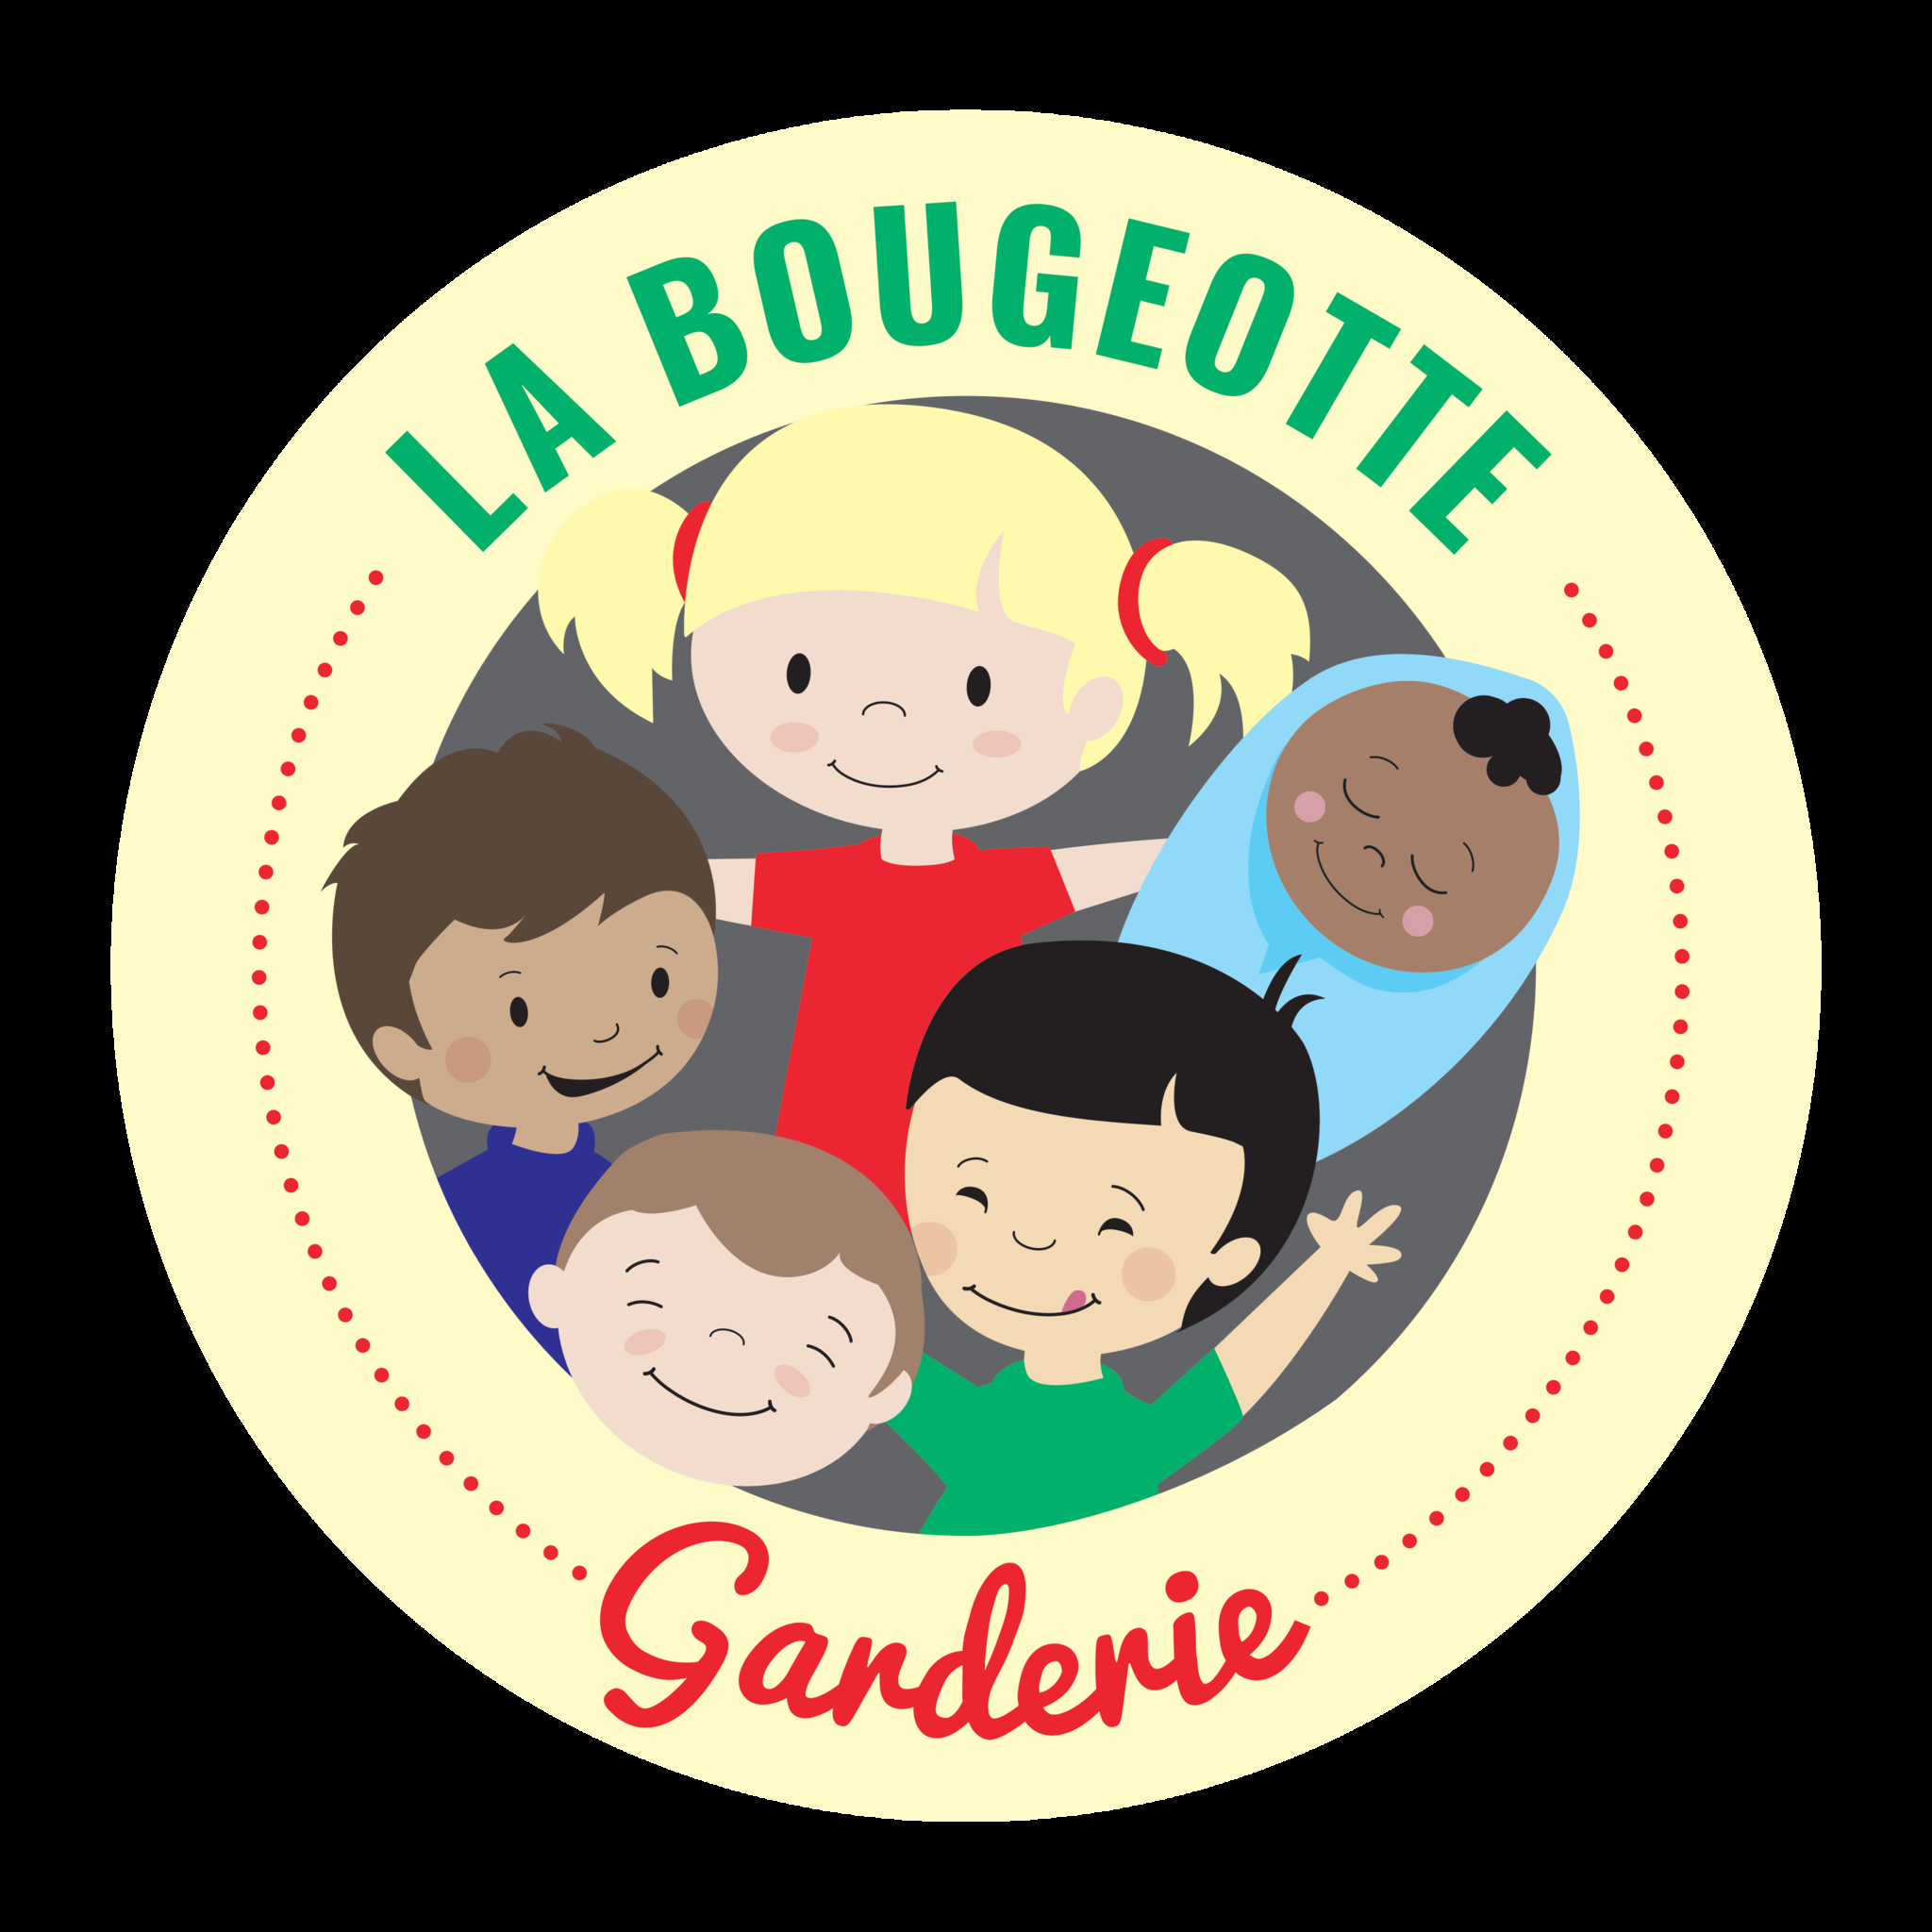 Garderie La Bougeotte - Childcare Services